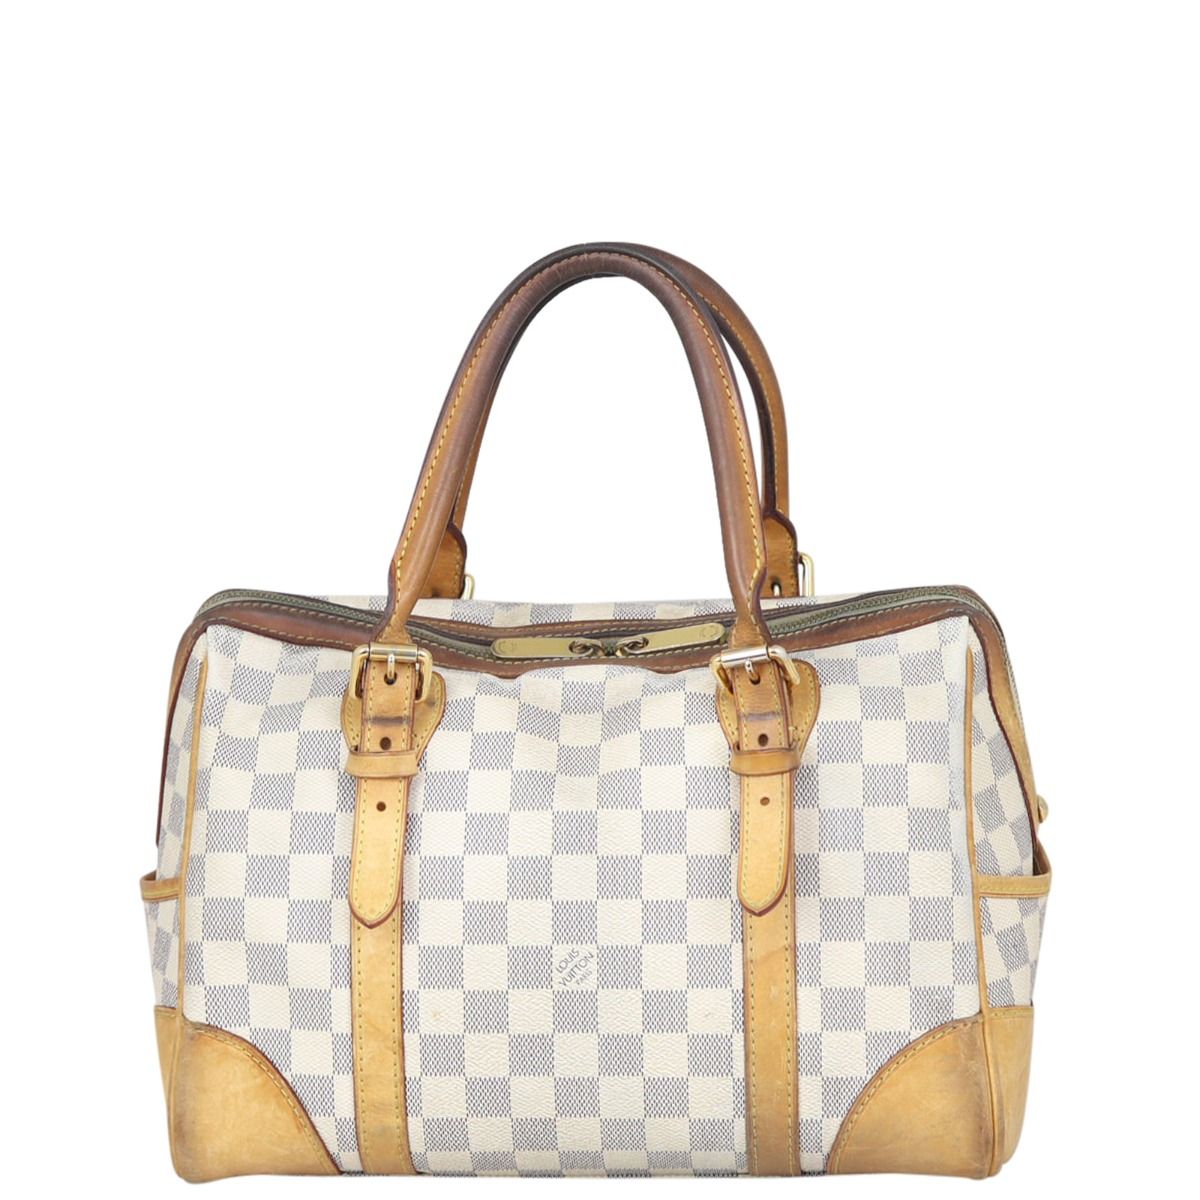 My Review Original Louis Vuitton Berkeley Azur Damier The Limited Edition  Handbag 